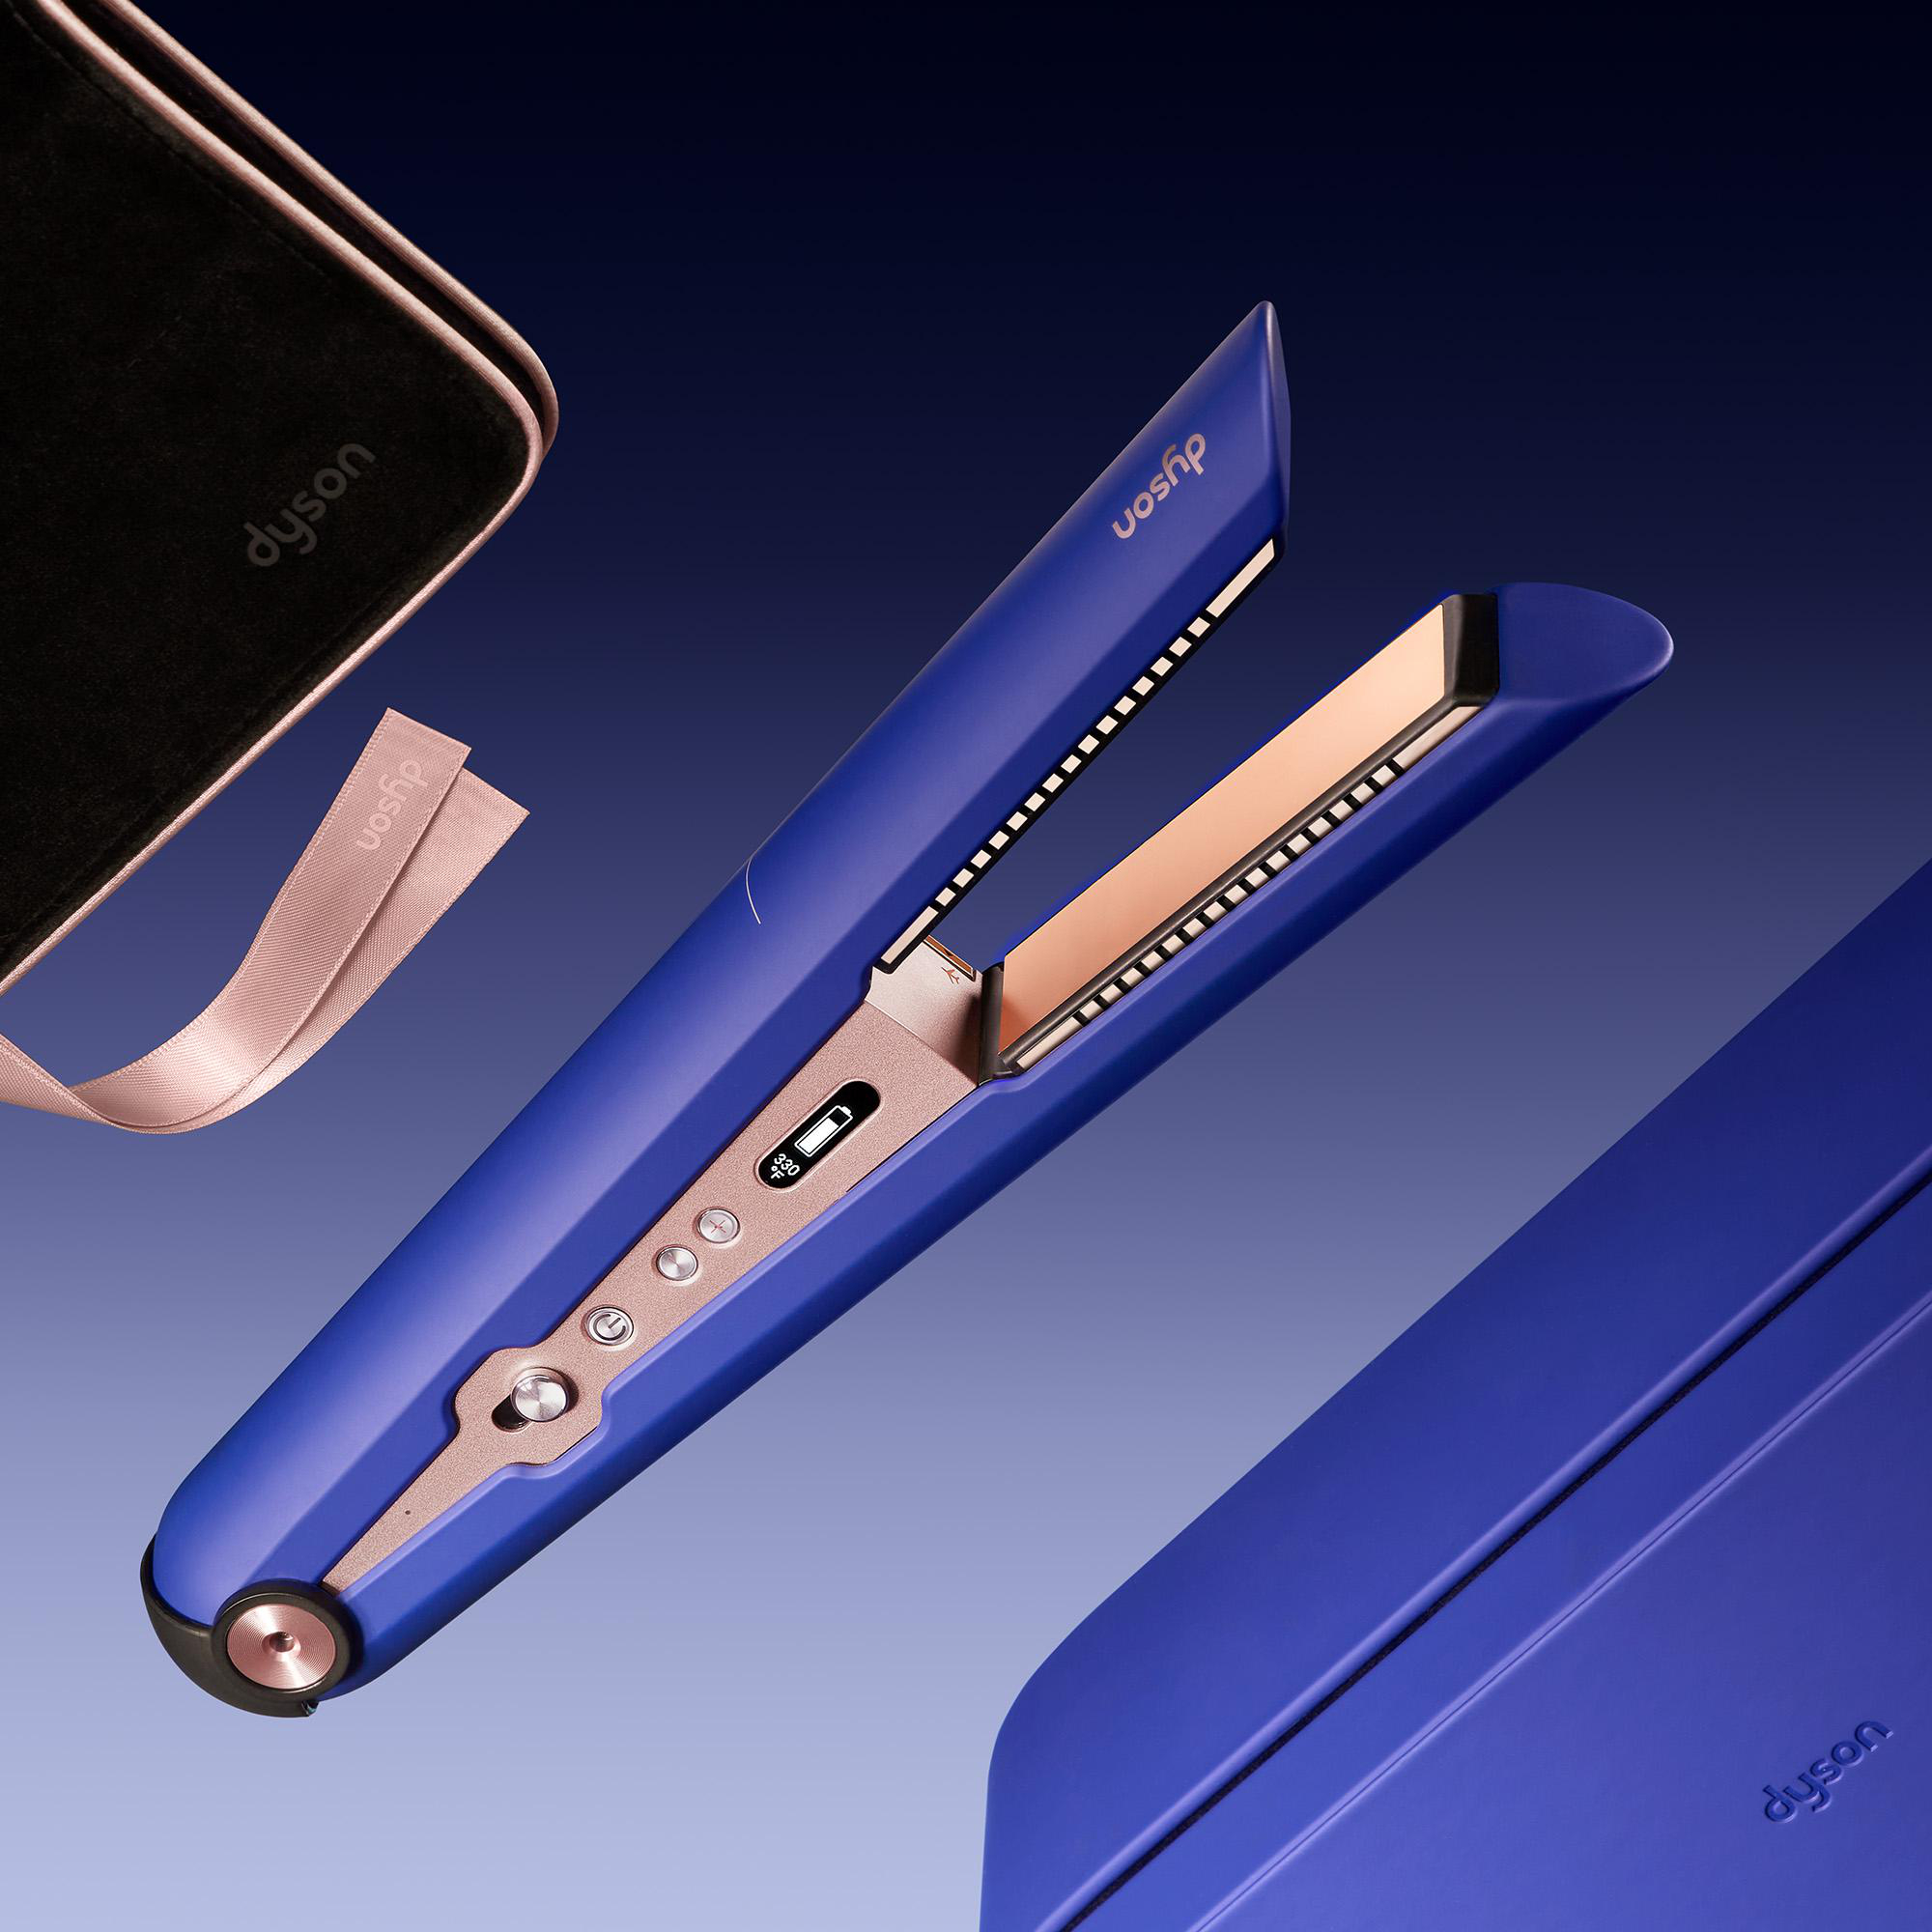 Beschichtung: Kupfer-Mangan Gifting - Haarglätter, DYSON Corrale™ Edition Violettblau/Rosé